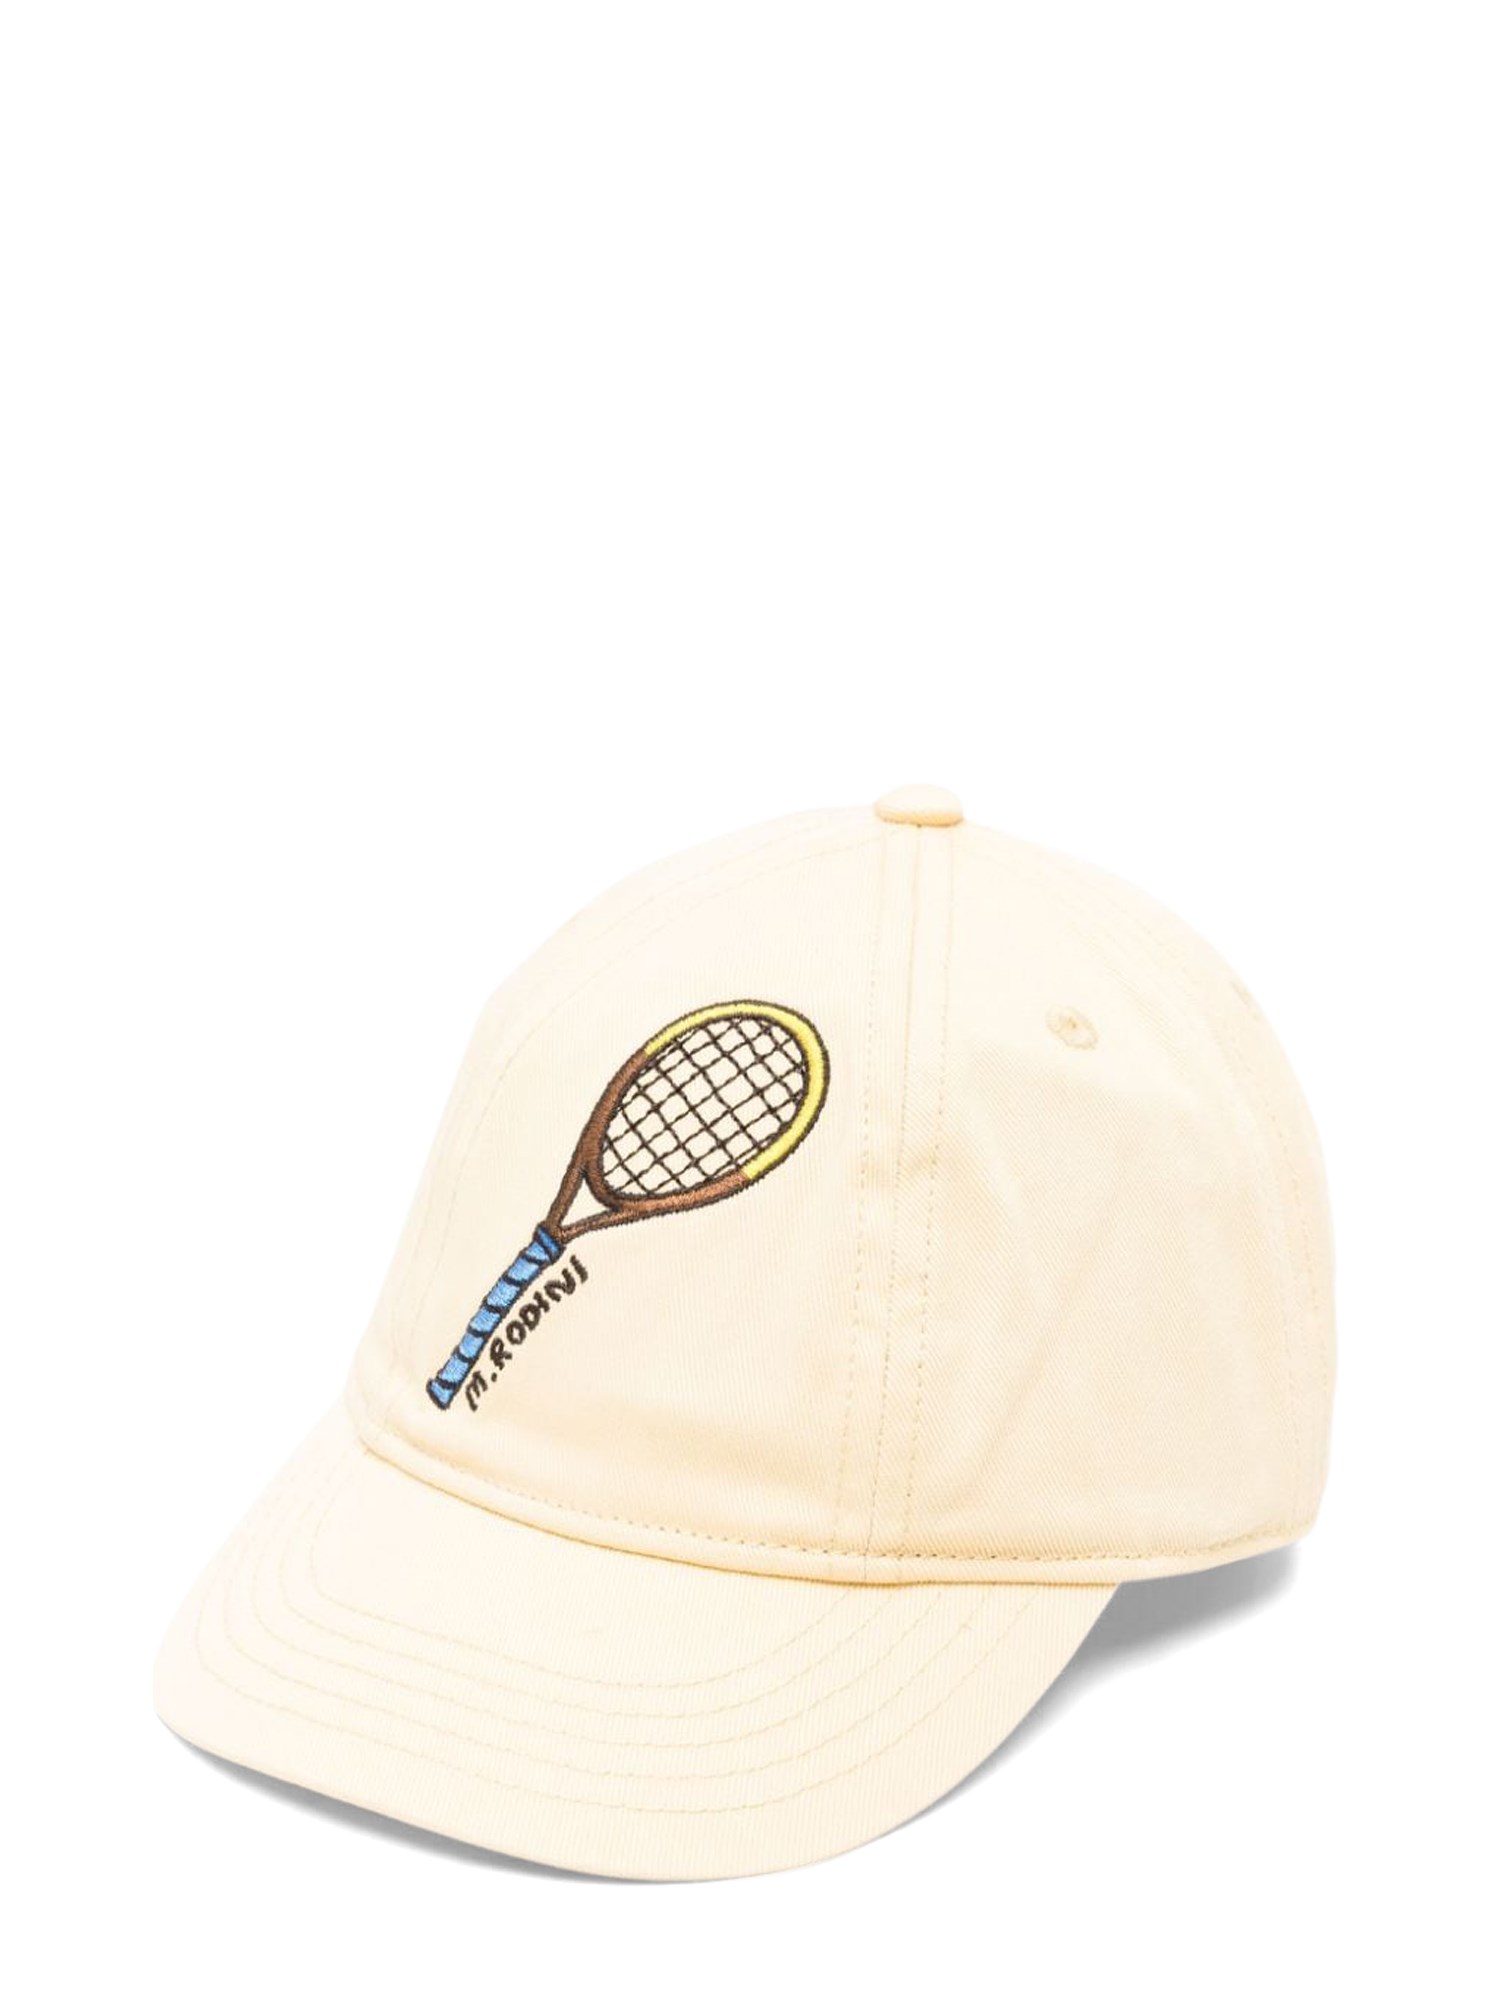 mini rodini tennis emb cap - chapter 2 - limited stock